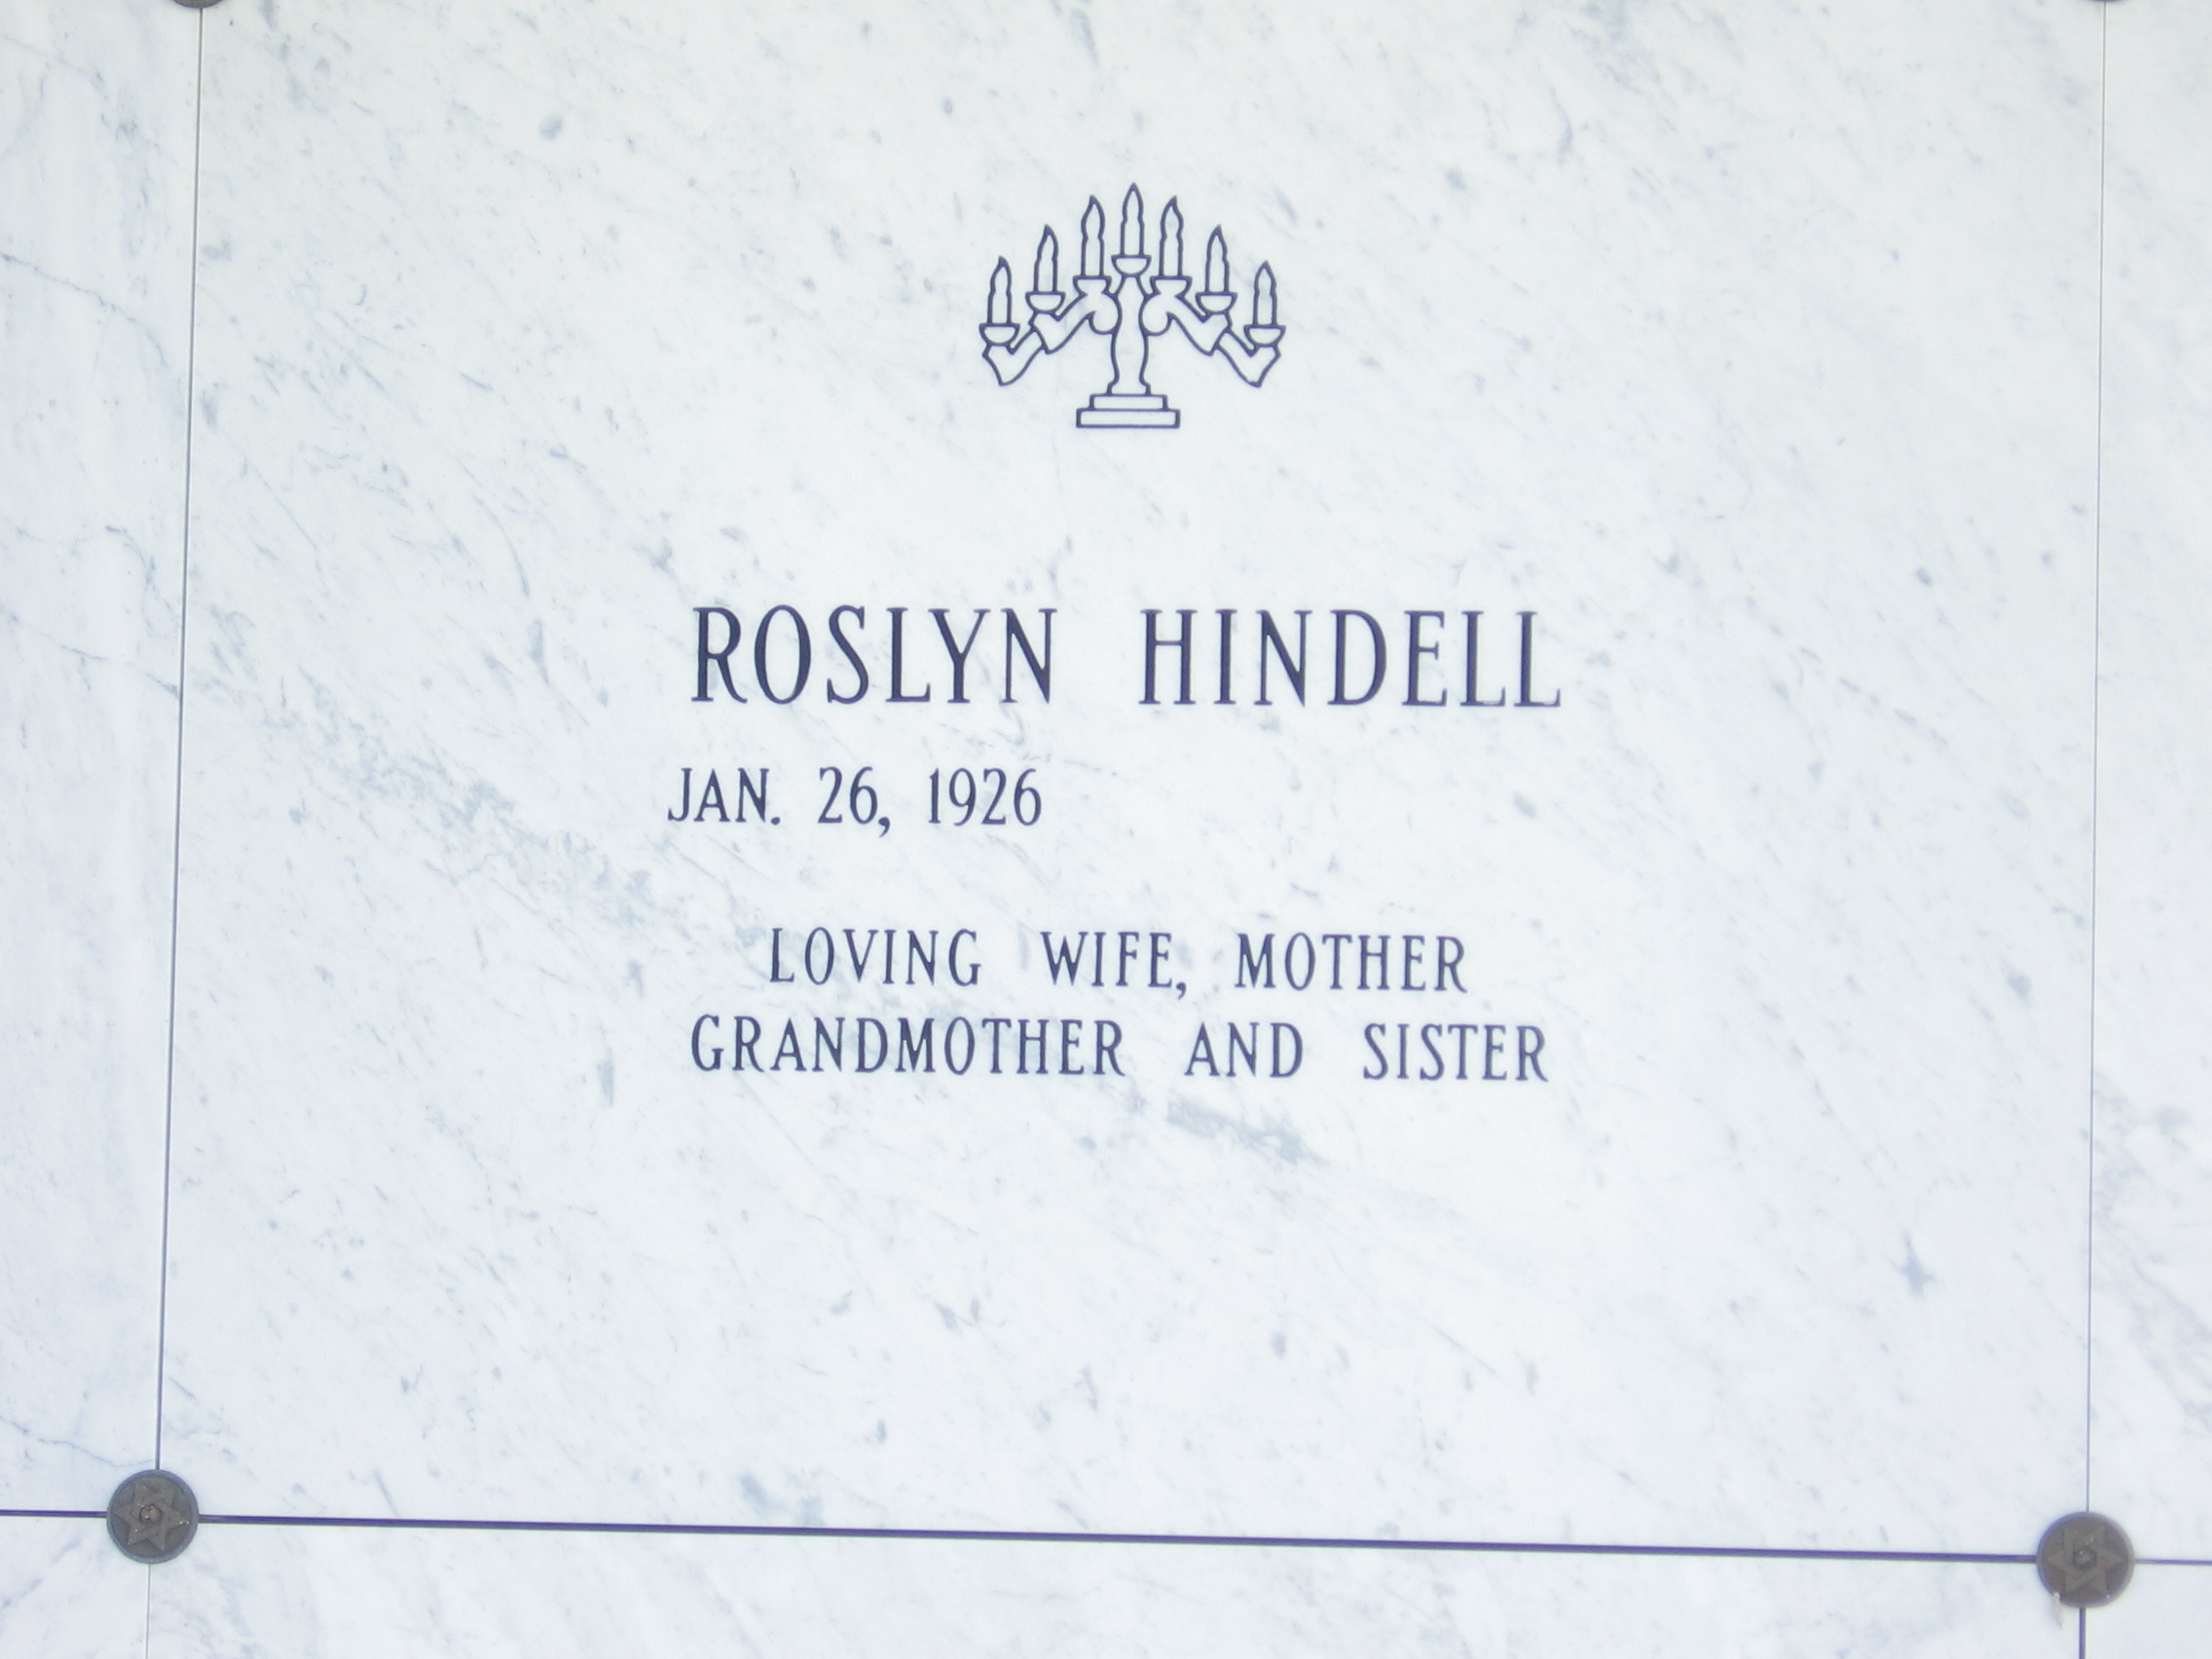 Roslyn Hindell